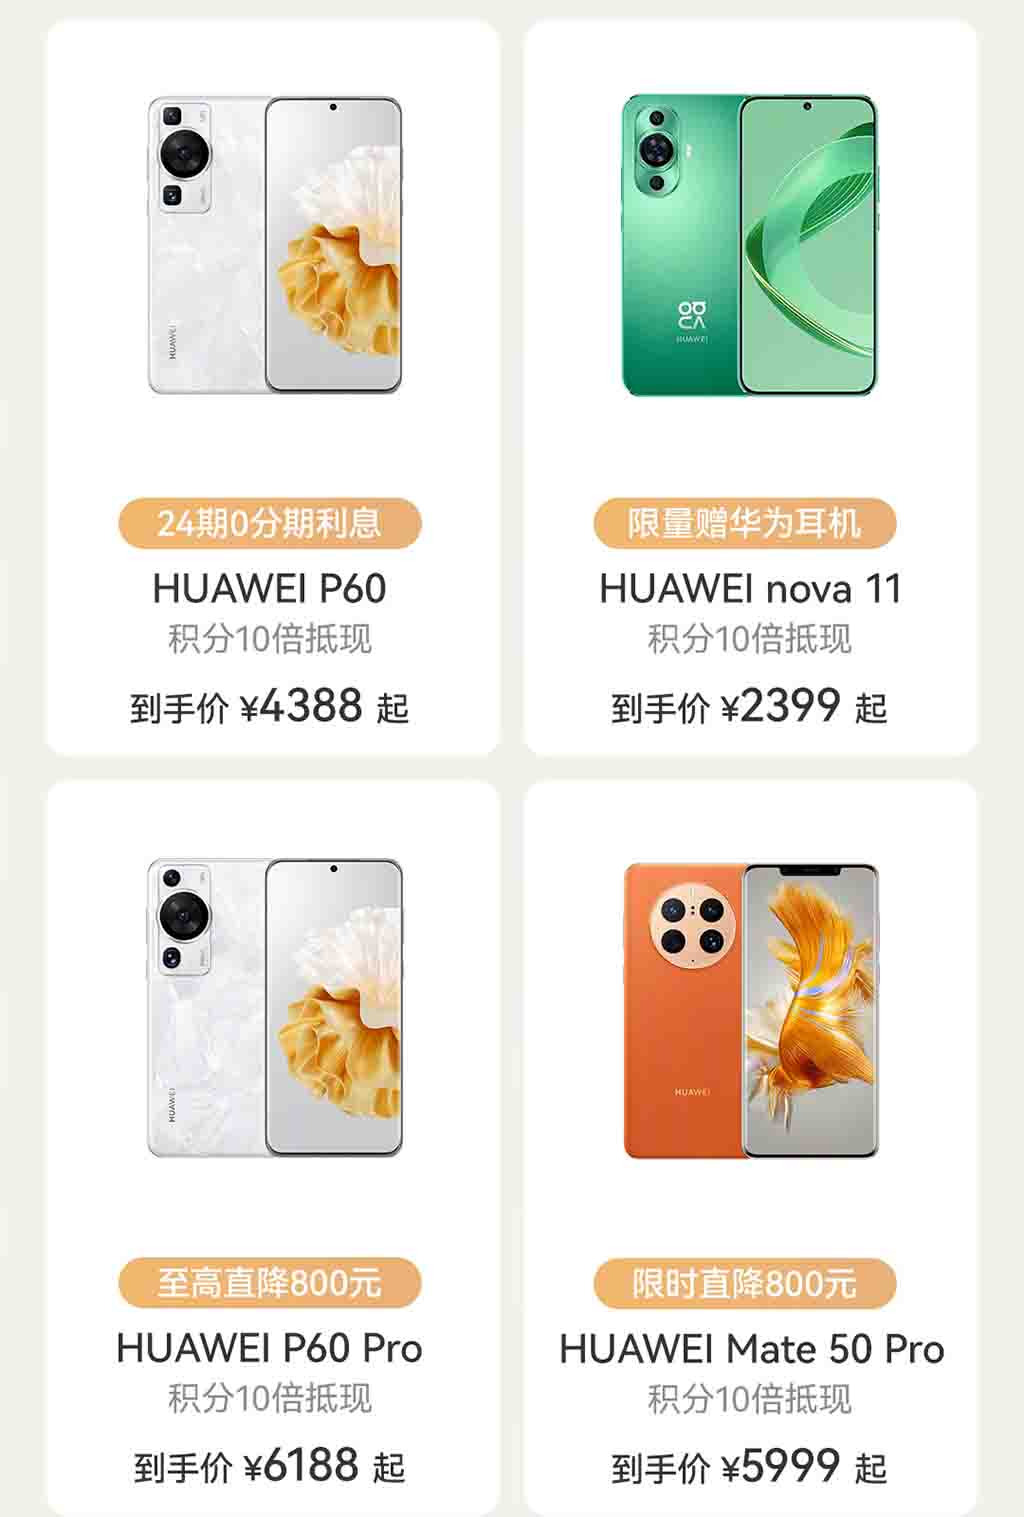 prices slashed Huawei p60 Mate 50